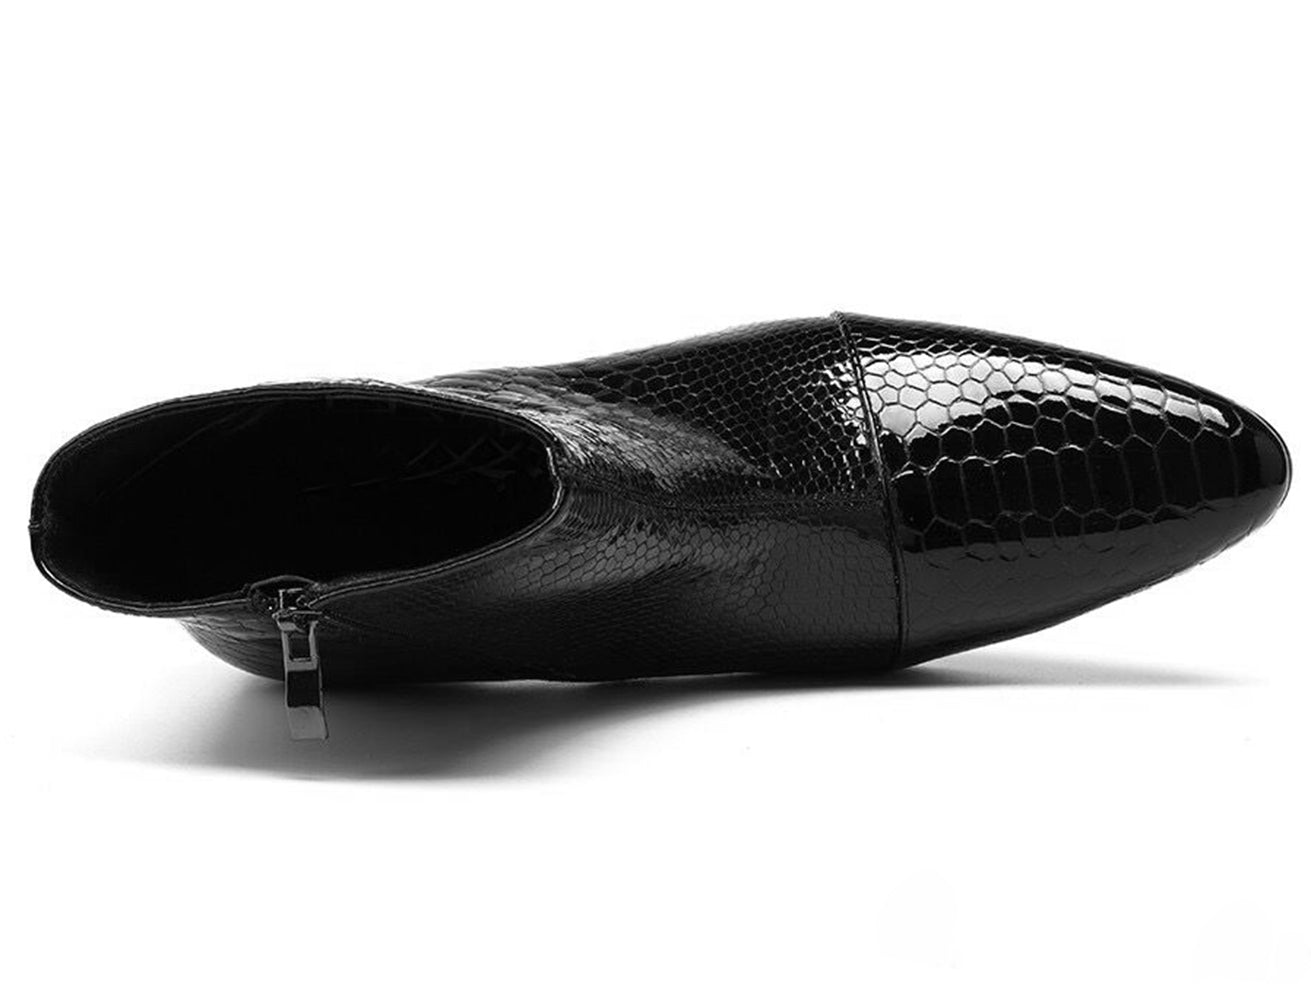 Men's Zipper Patent Leather Plaid Western Boots